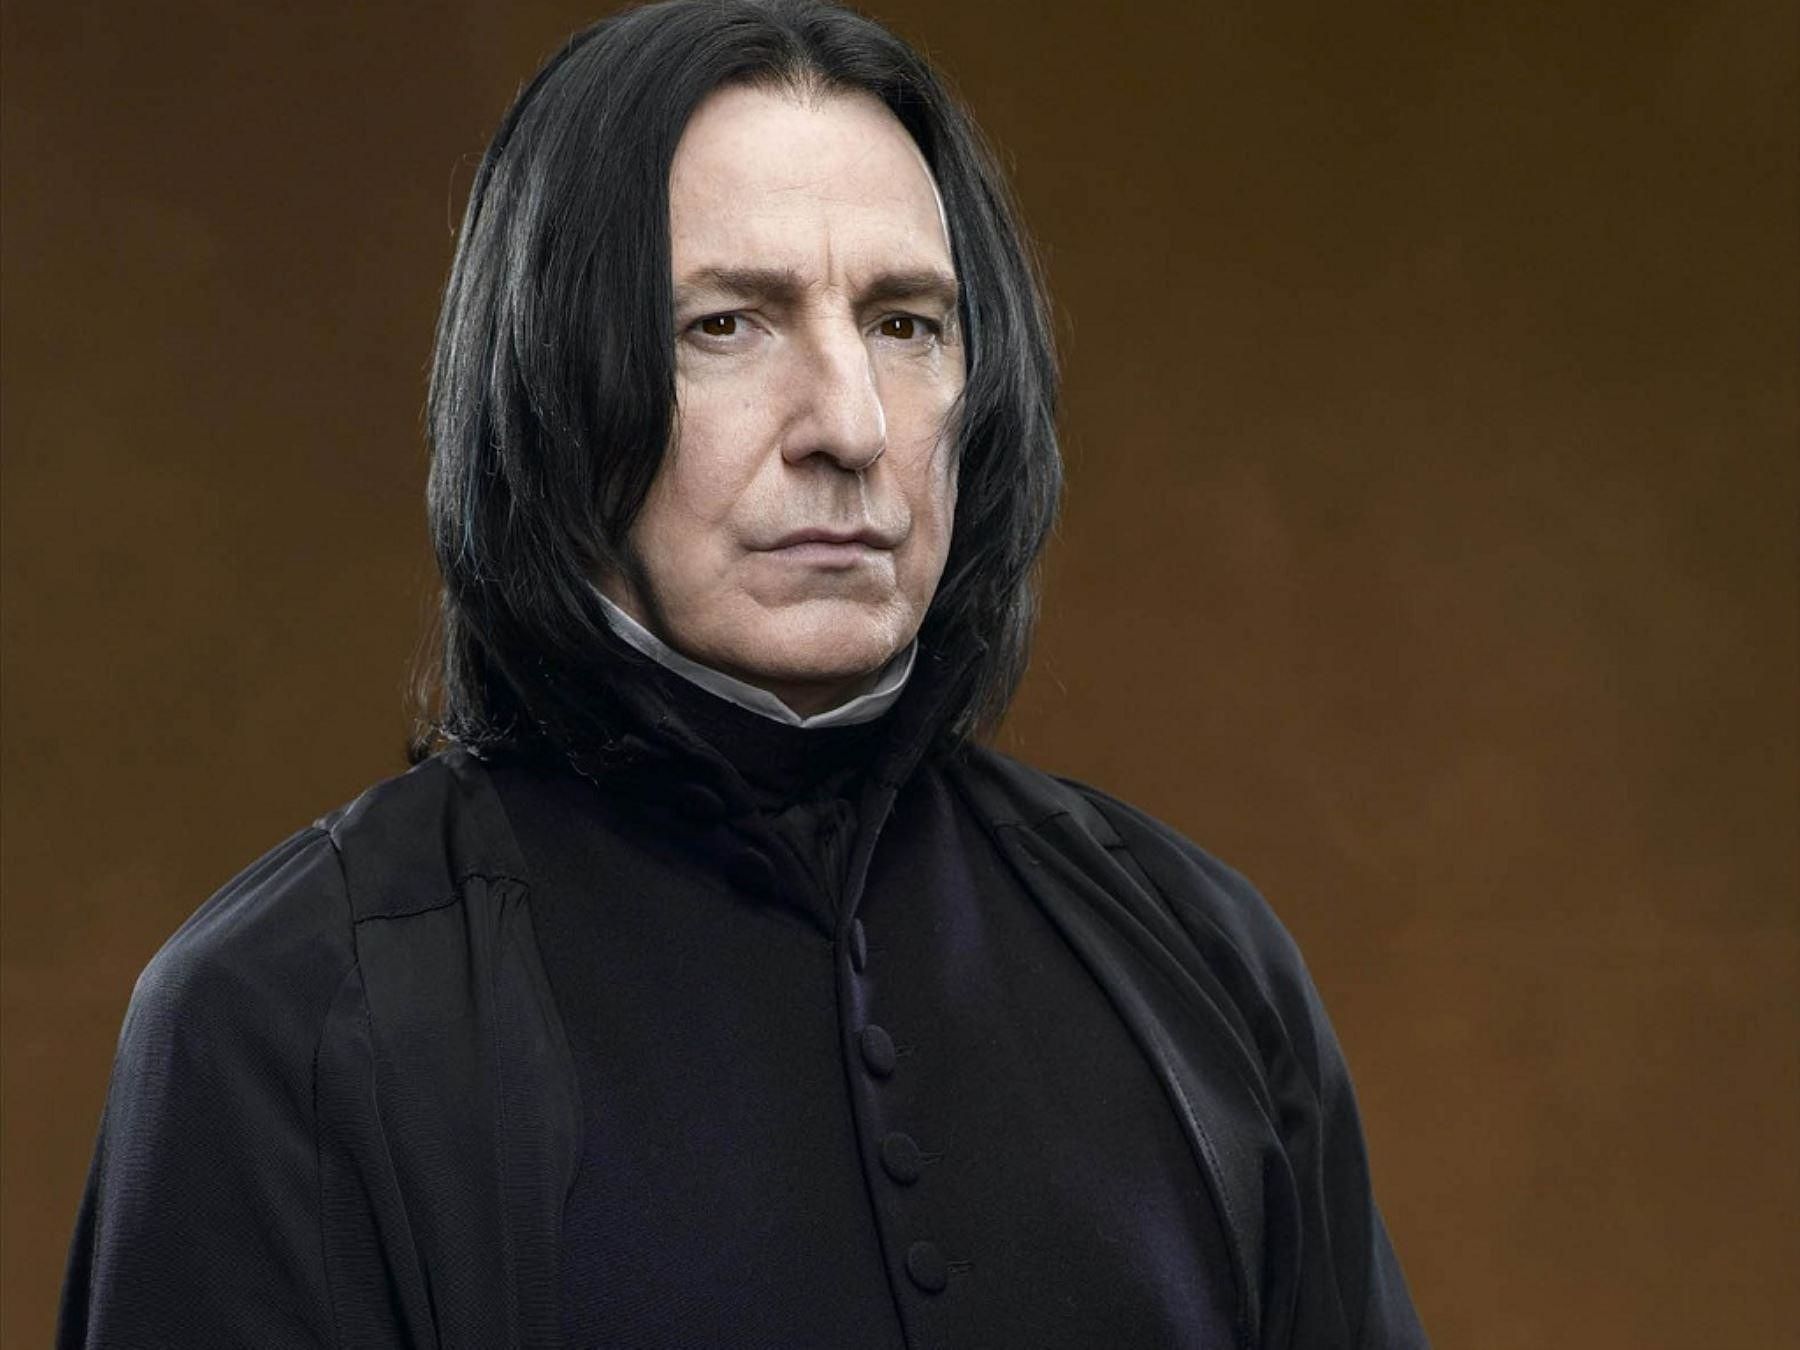 Actor Alan Rickman, Snape in "Harry Potter" films, dies at 69